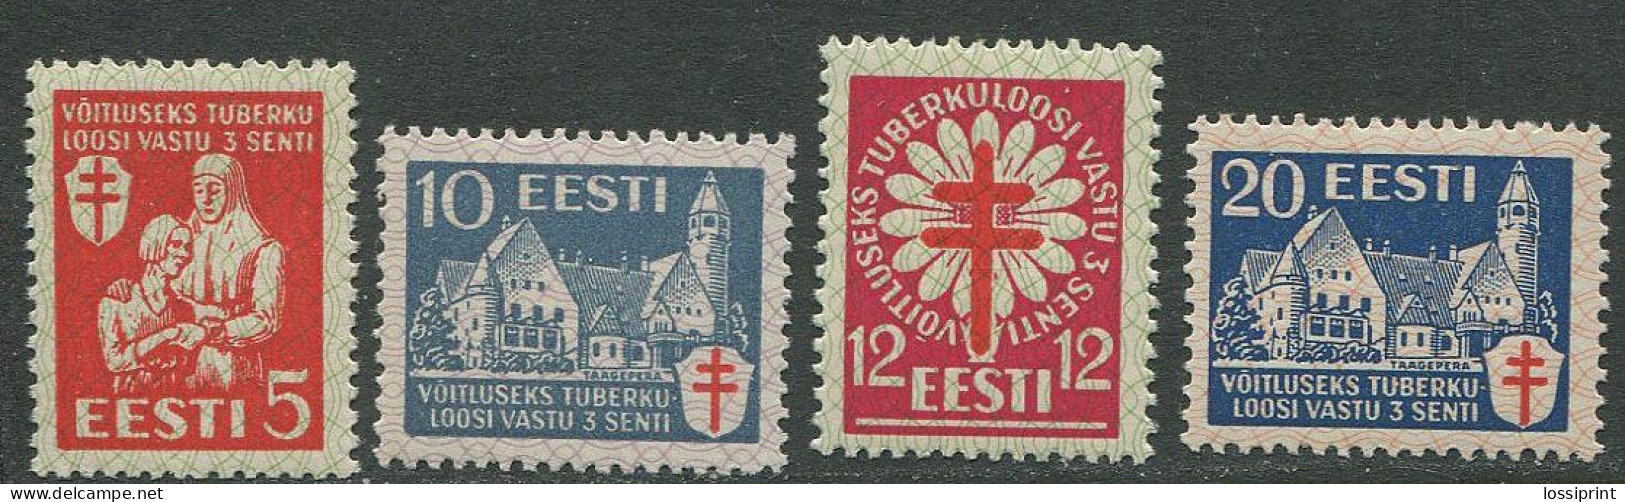 Estonia:Unused Stamps Serie Tuberculosis, Taagepera Manor, 1933, MNH - Estland